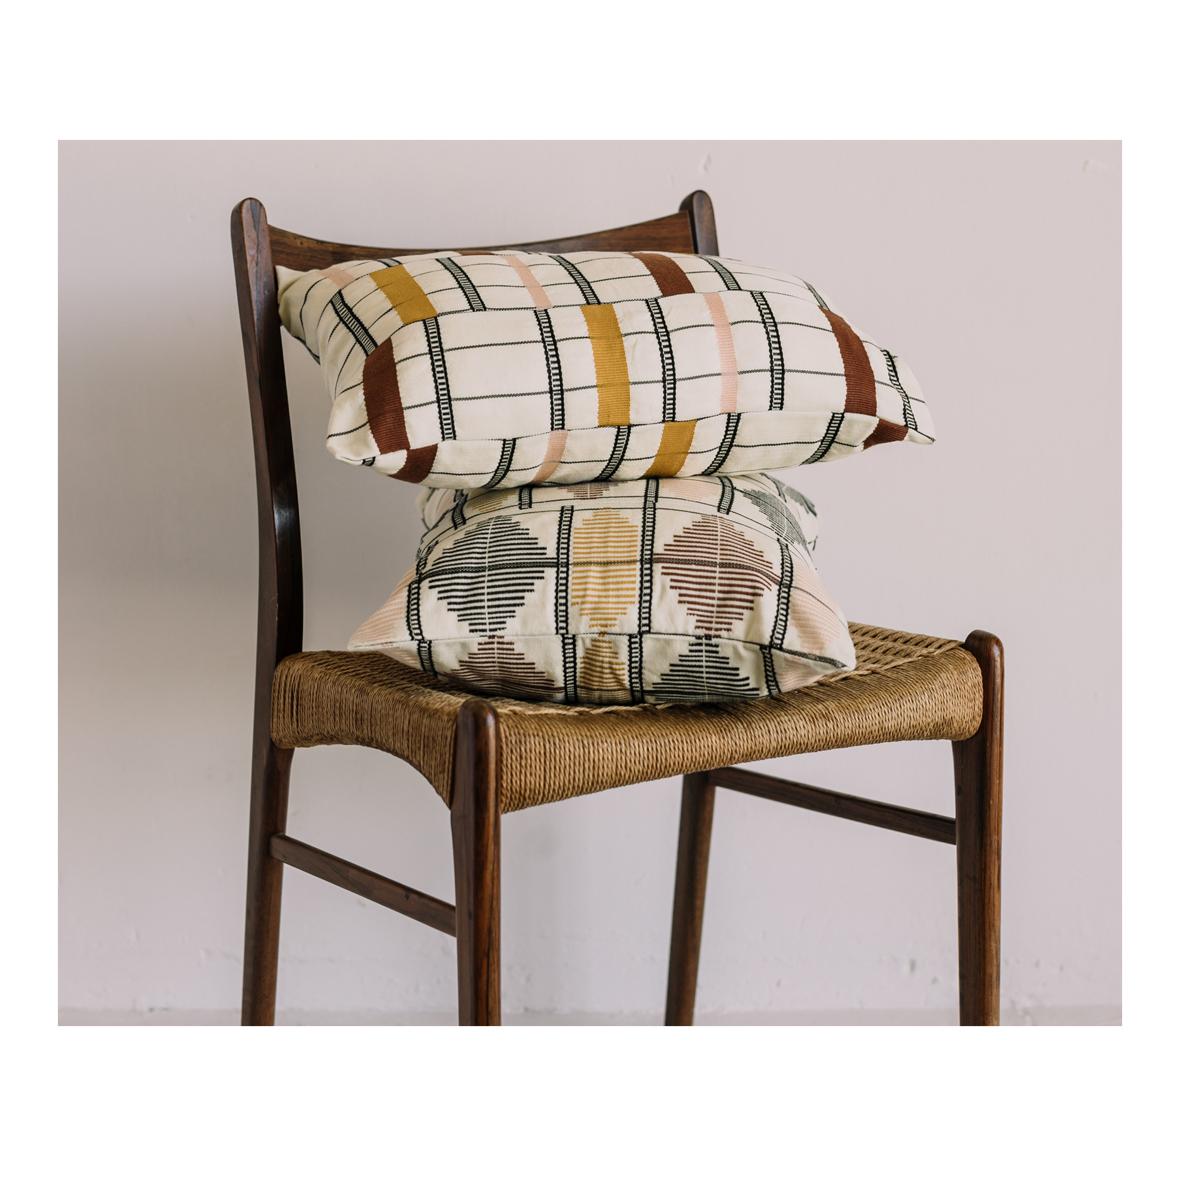 Hand-Woven Contemporary Ethnic Cushion Handwoven Cotton Decorative Kente Earth